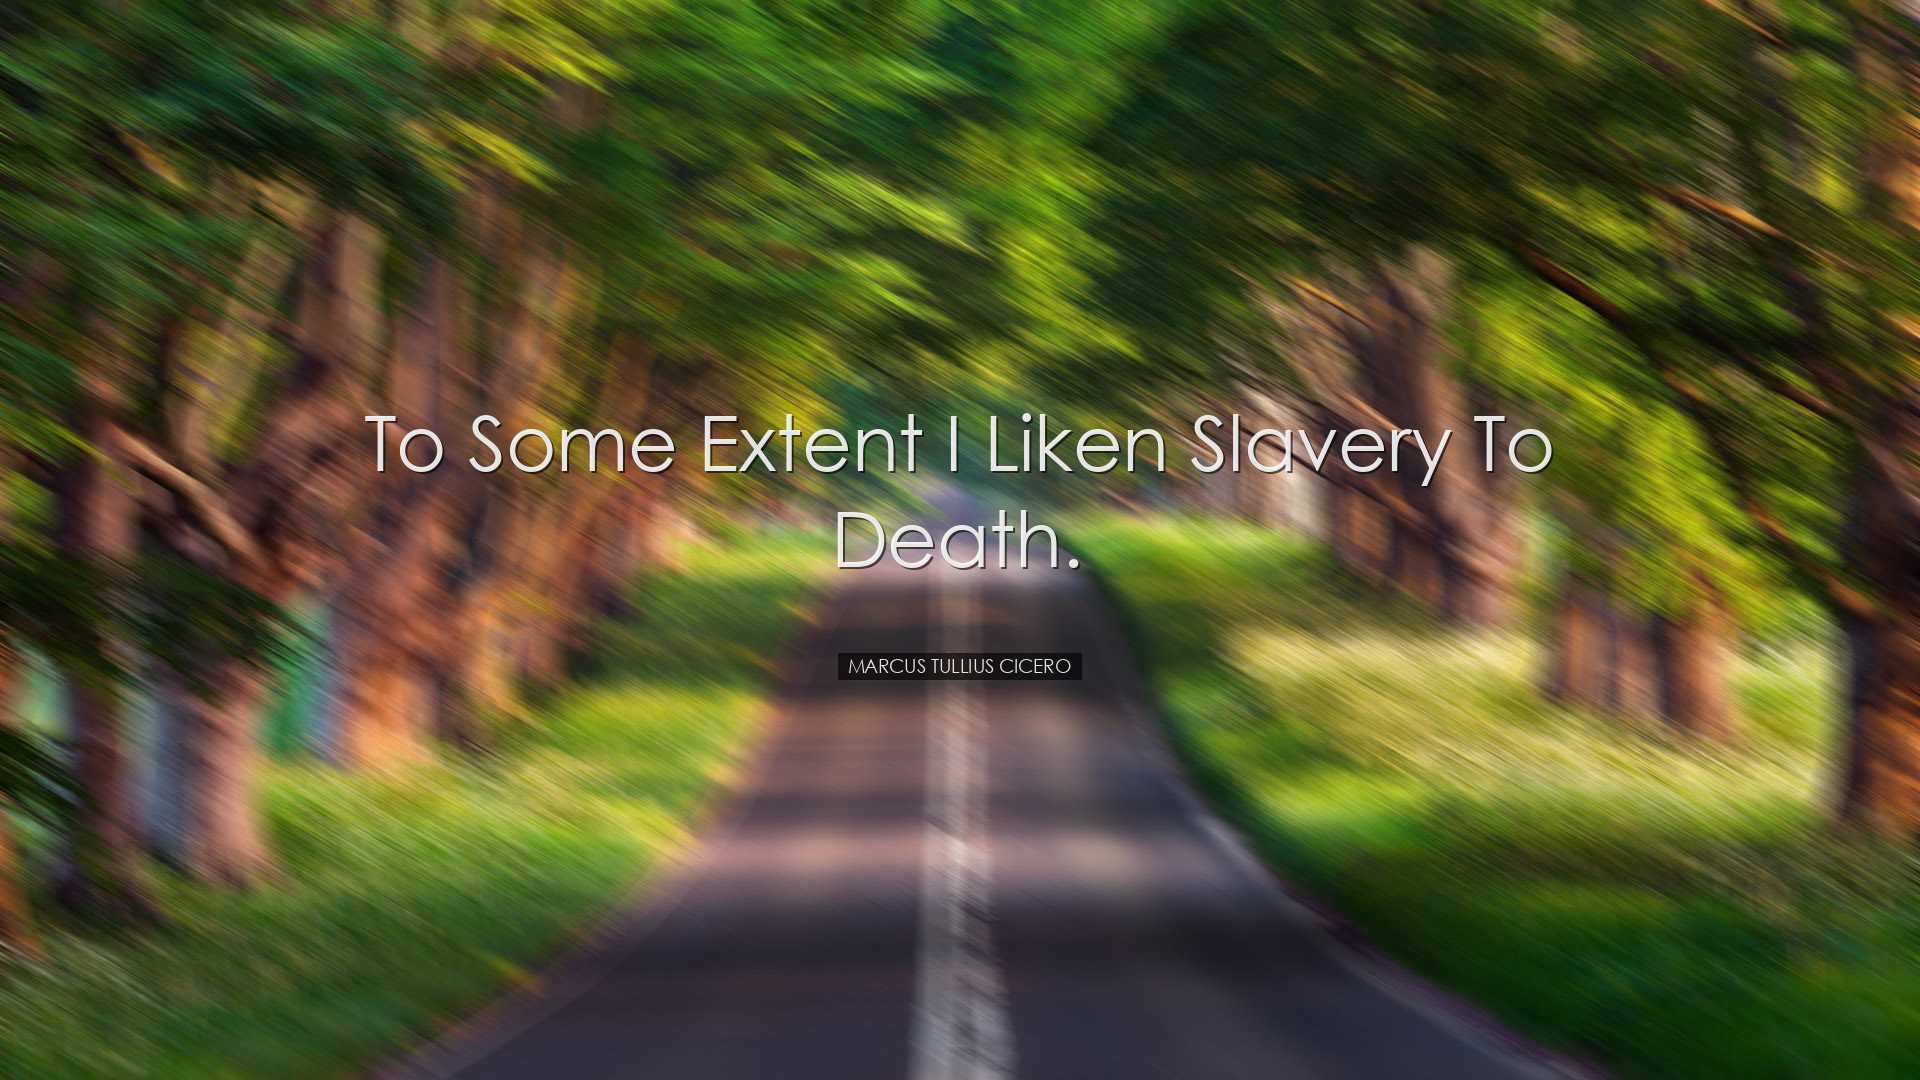 To some extent I liken slavery to death. - Marcus Tullius Cicero